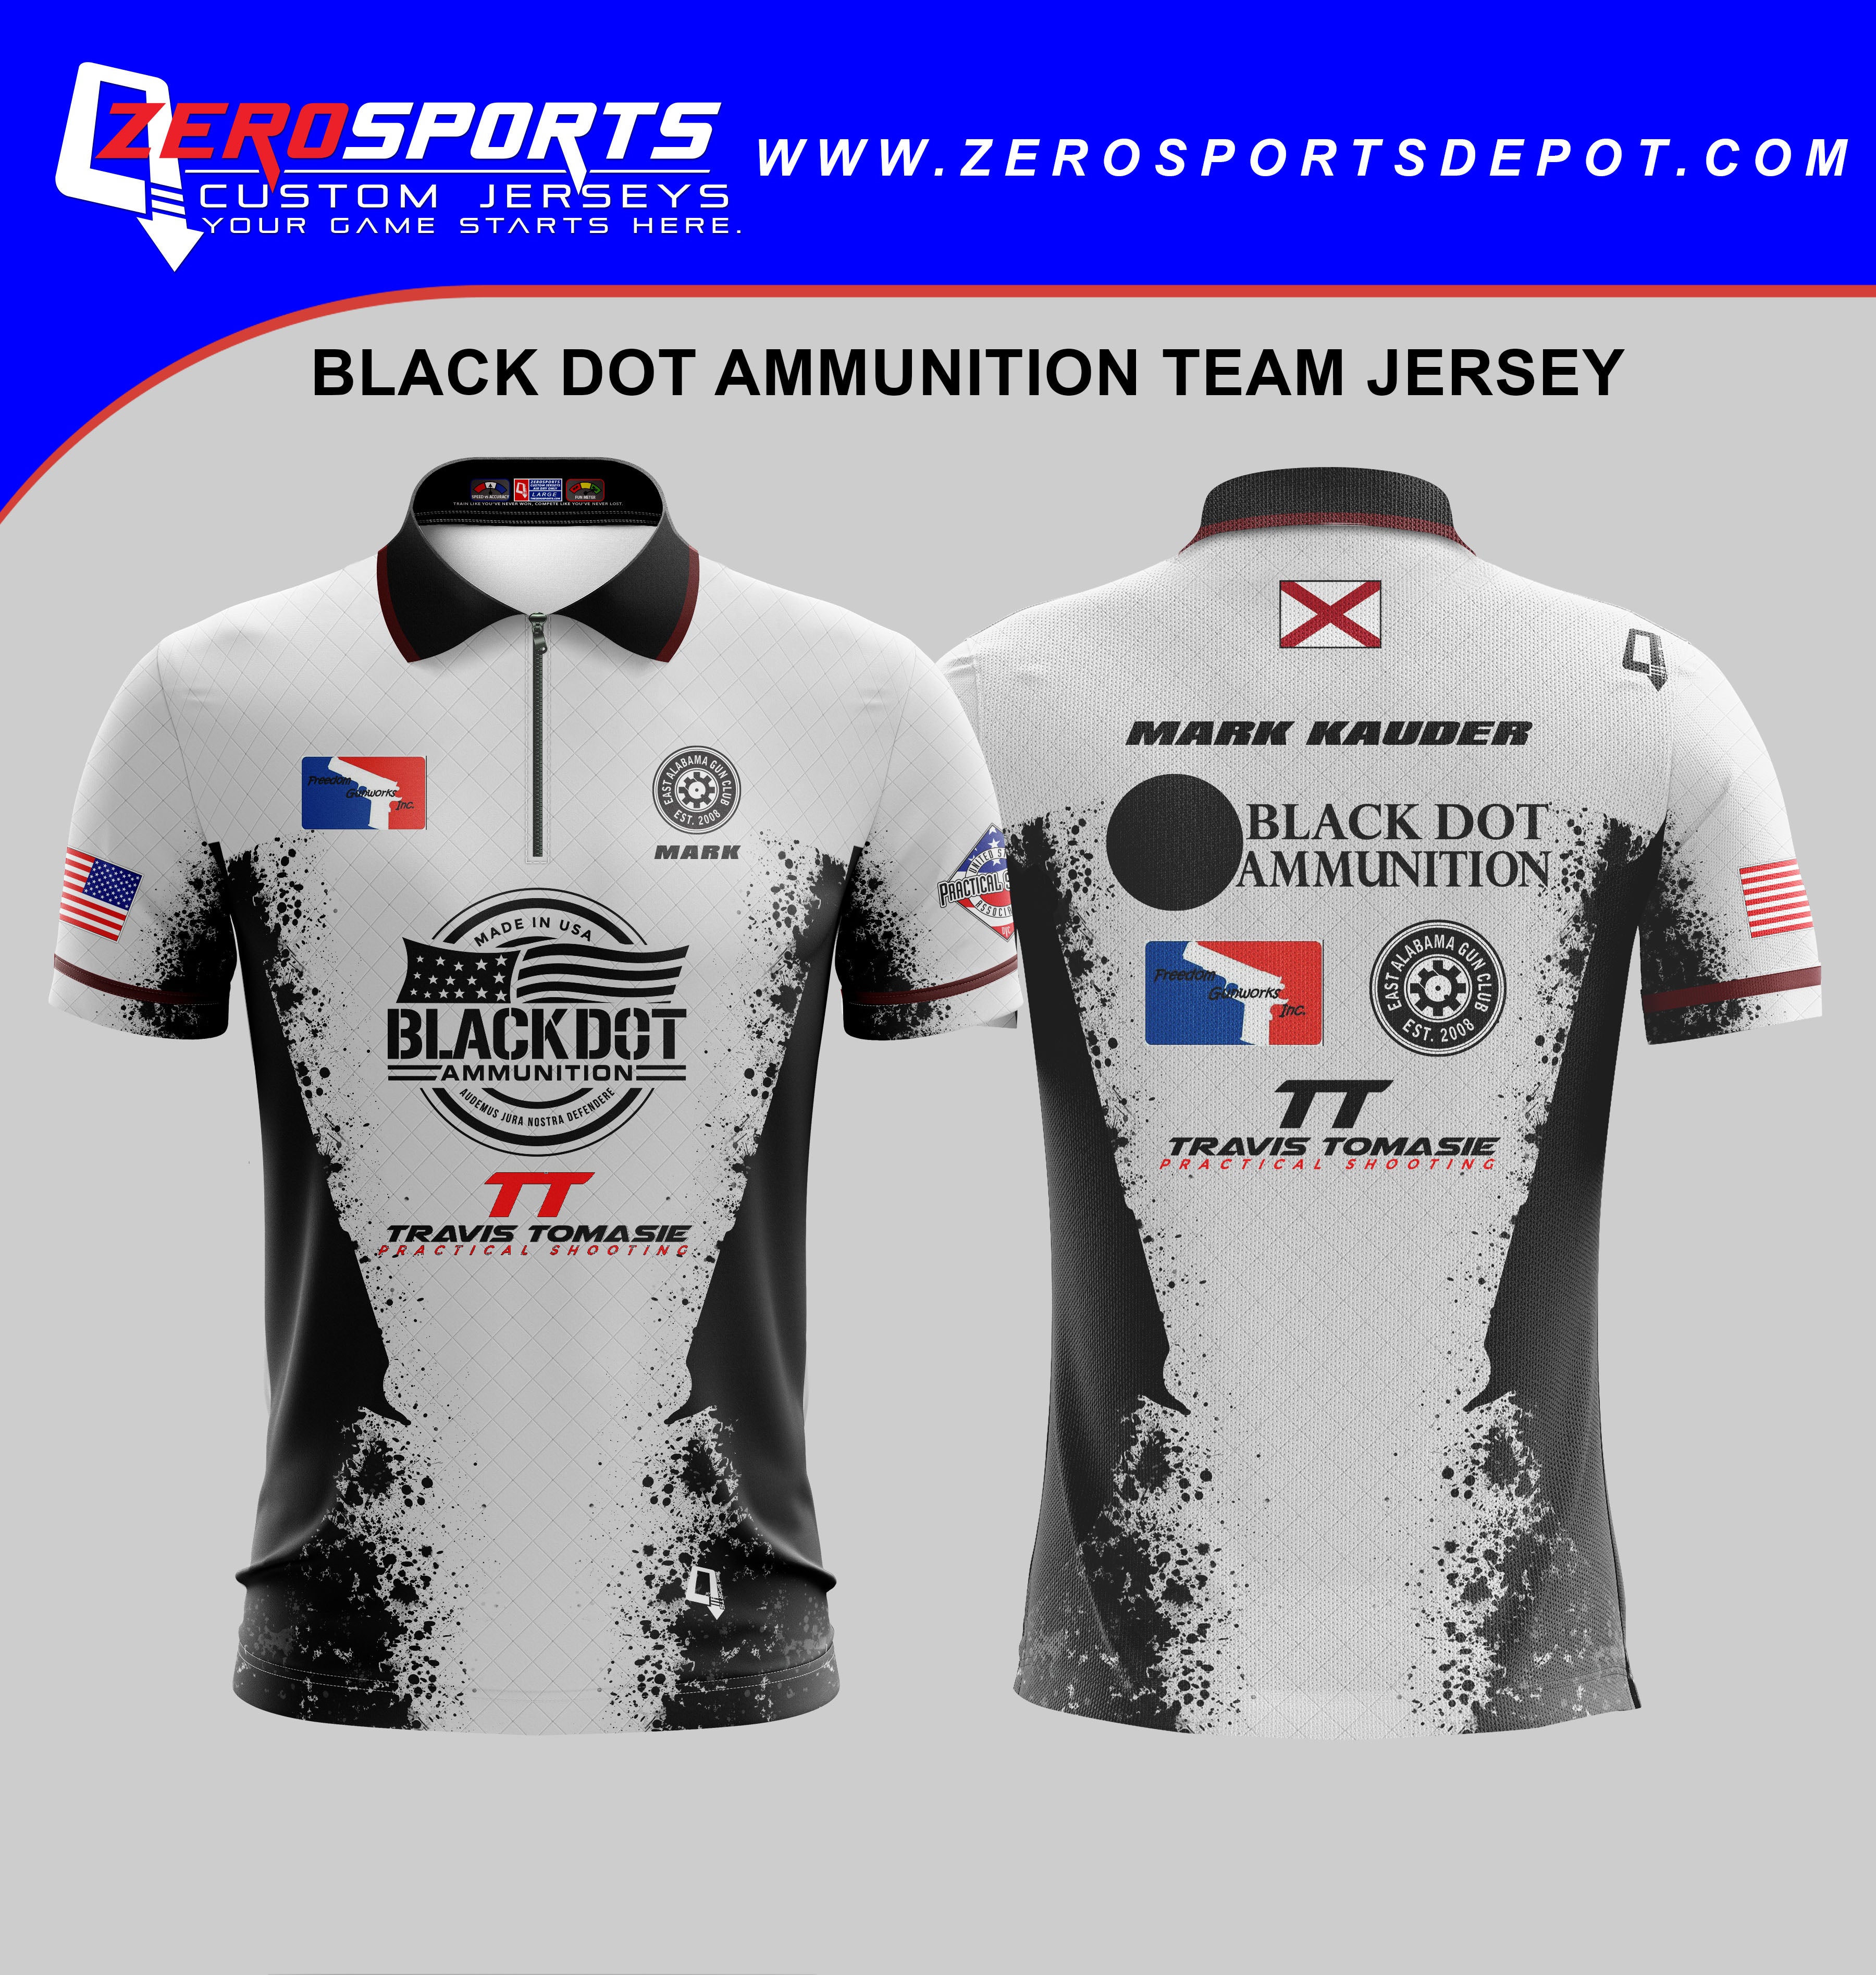 Black Dot Ammunition Team Jersey